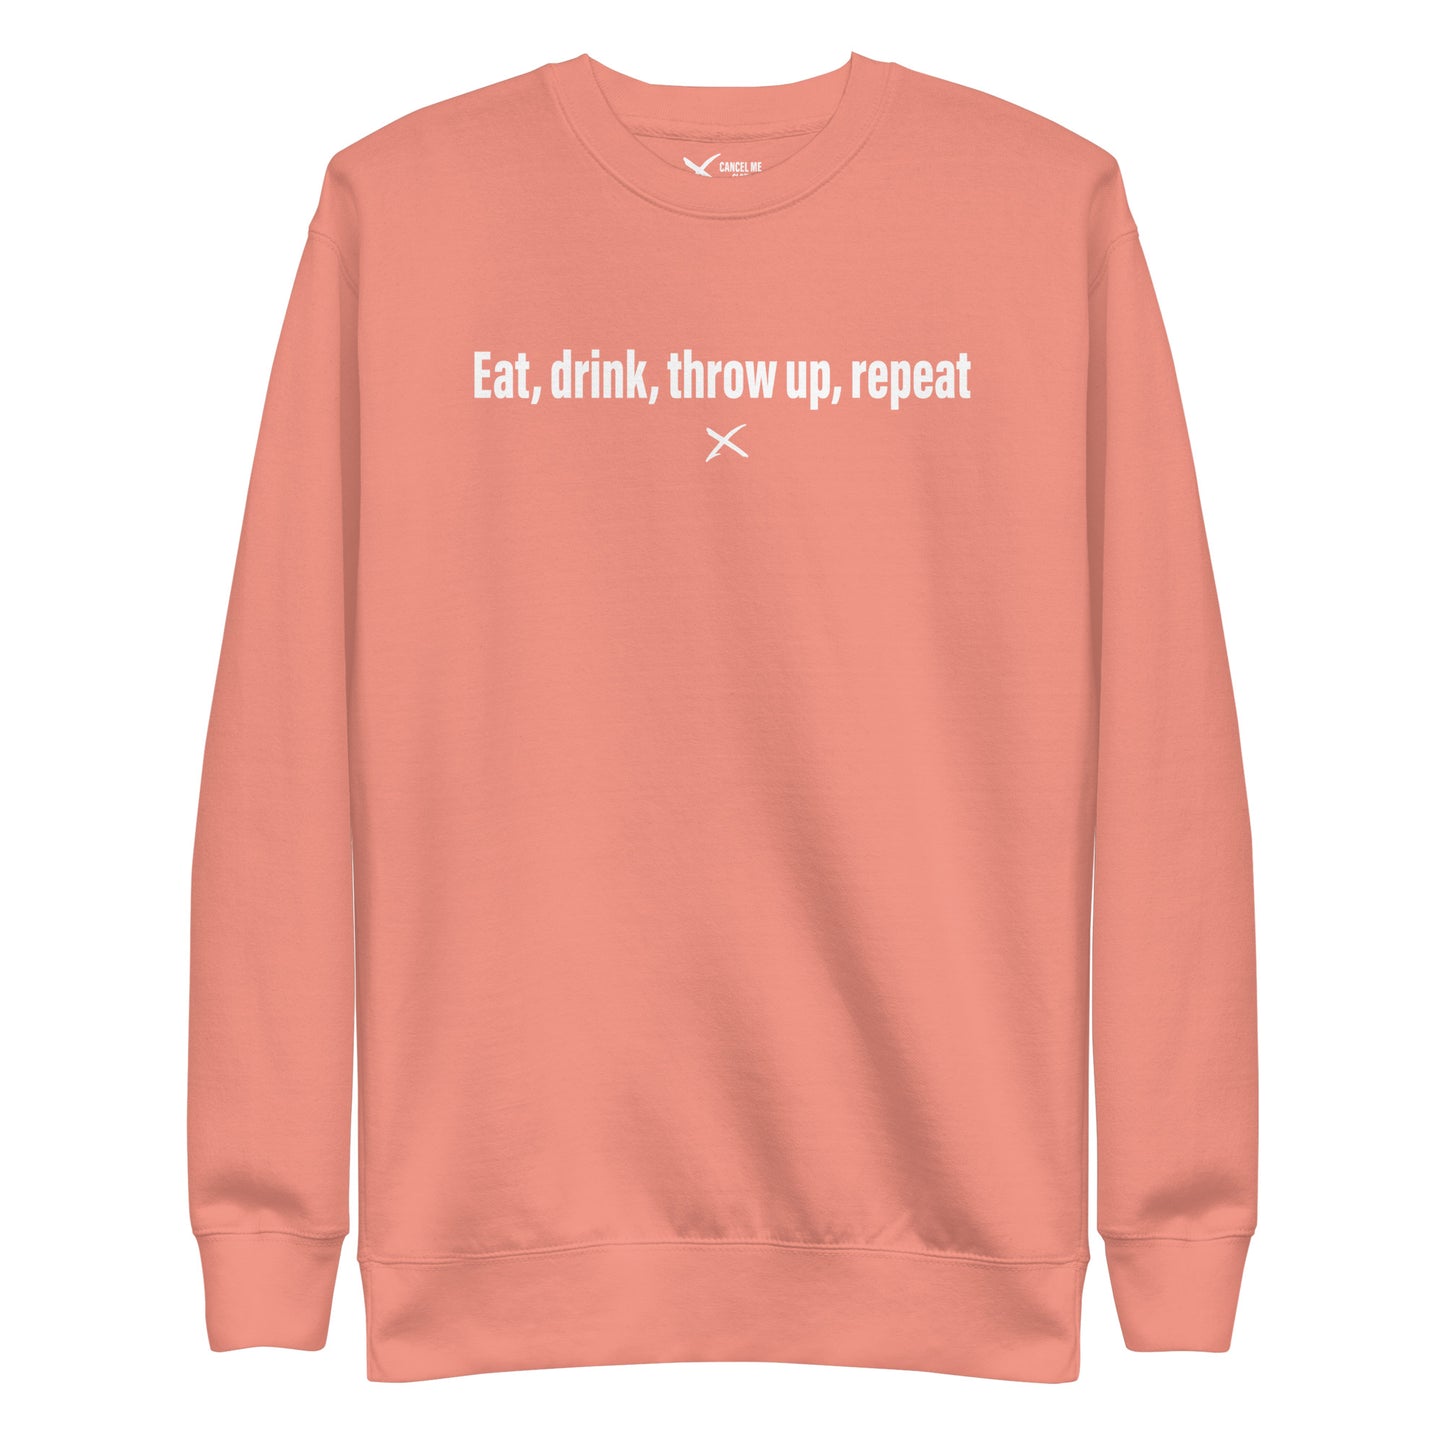 Eat, drink, throw up, repeat - Sweatshirt